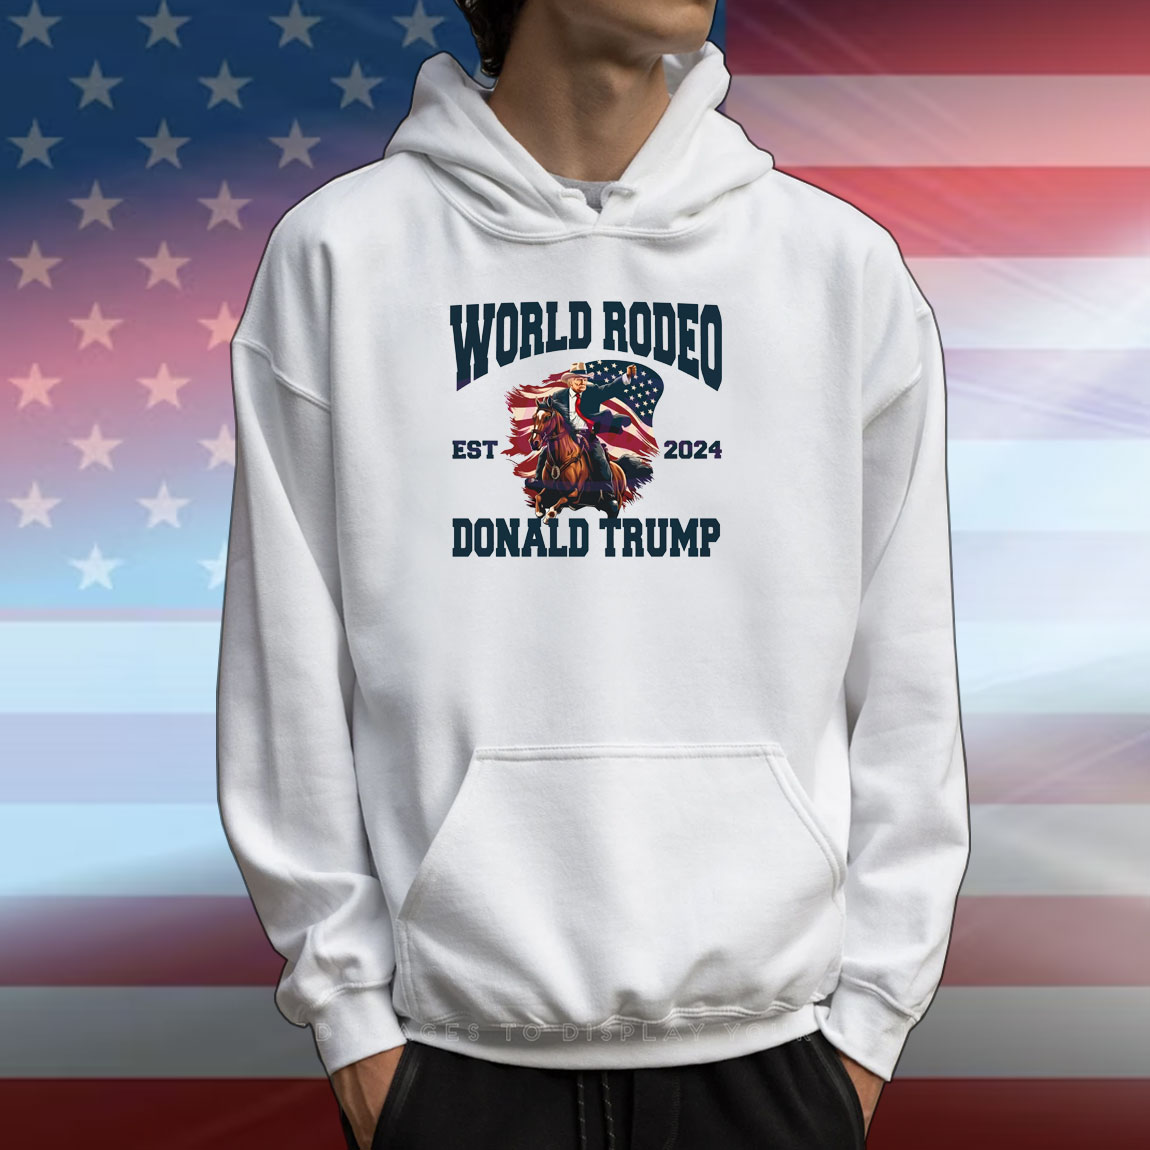 World Rodeo Est 2024 Donald Trump T-Shirts